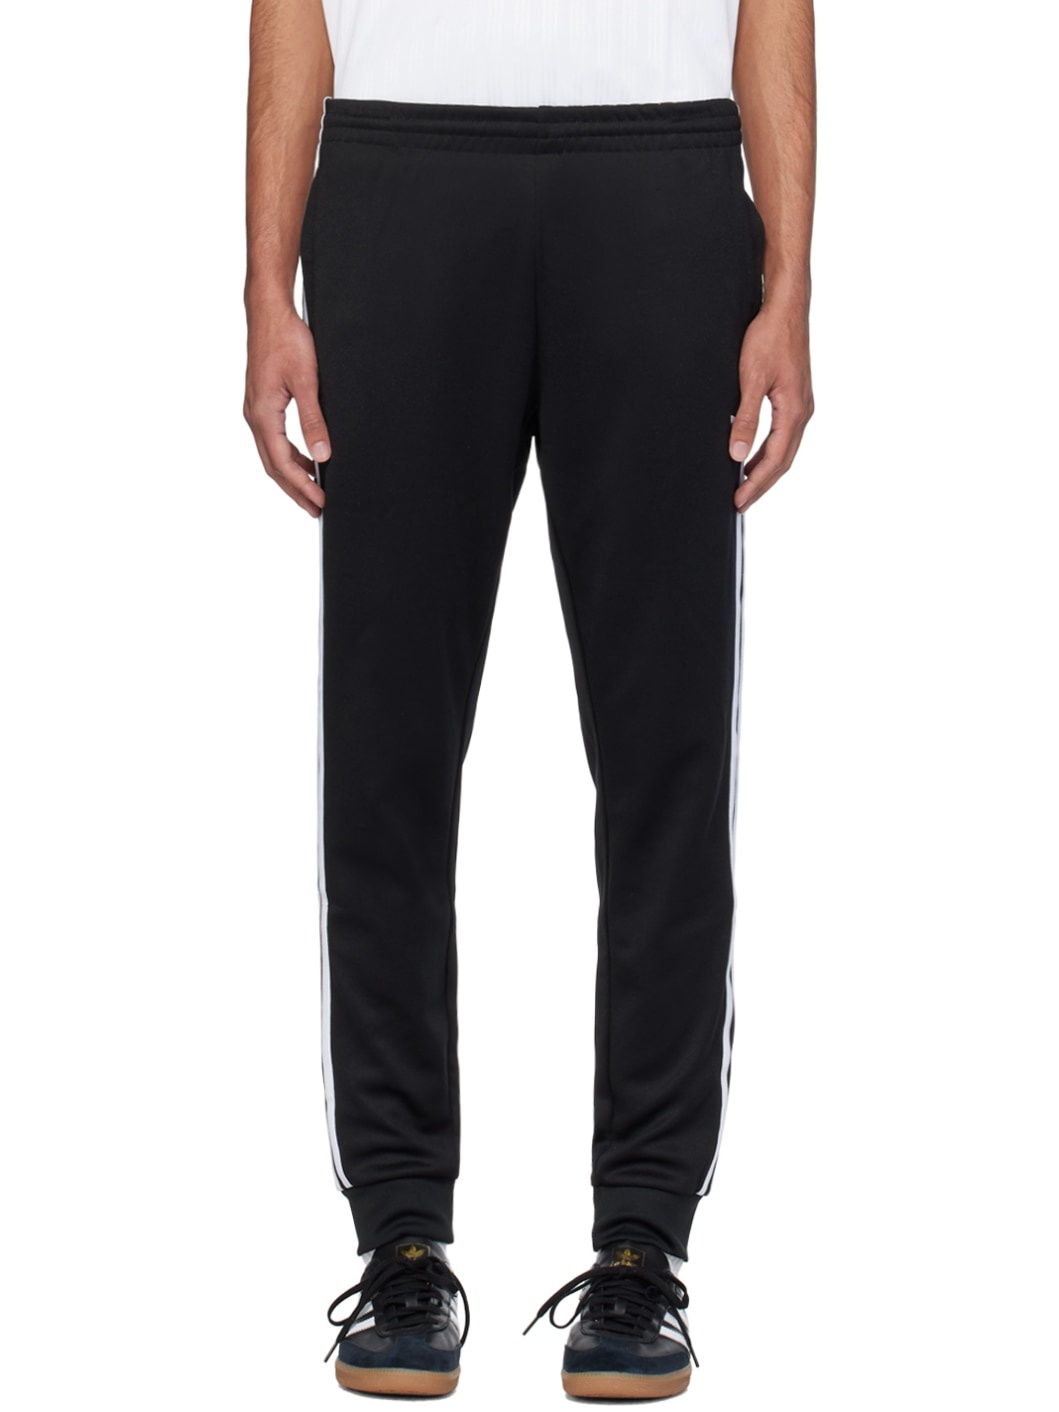 Black 3-Stripe Sweatpants - 1